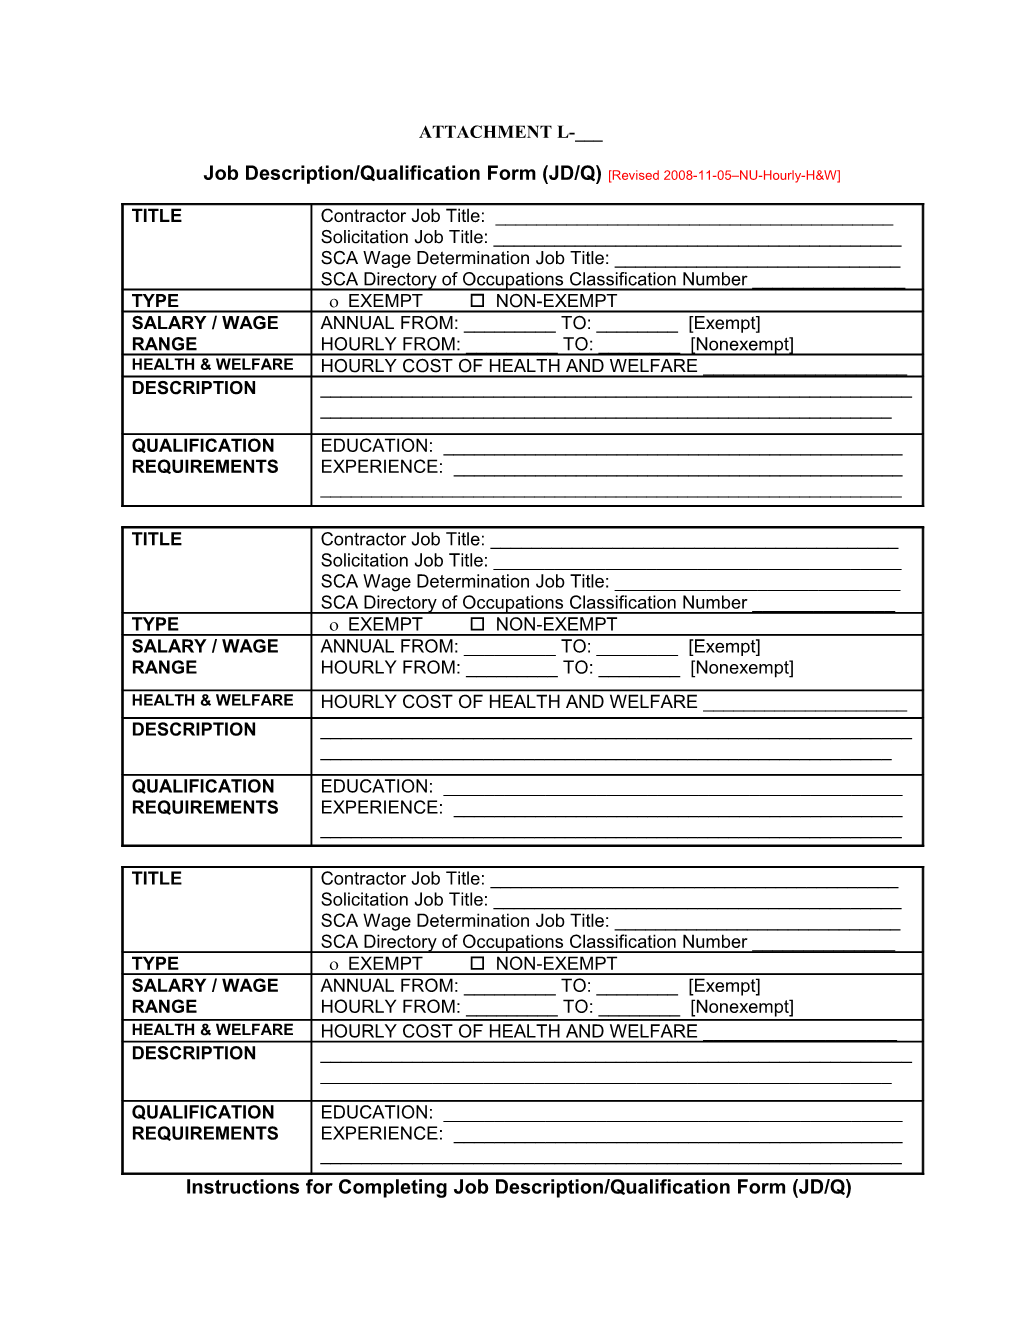 Instructions for Completing Job Description/Qualification Form (JD/Q)